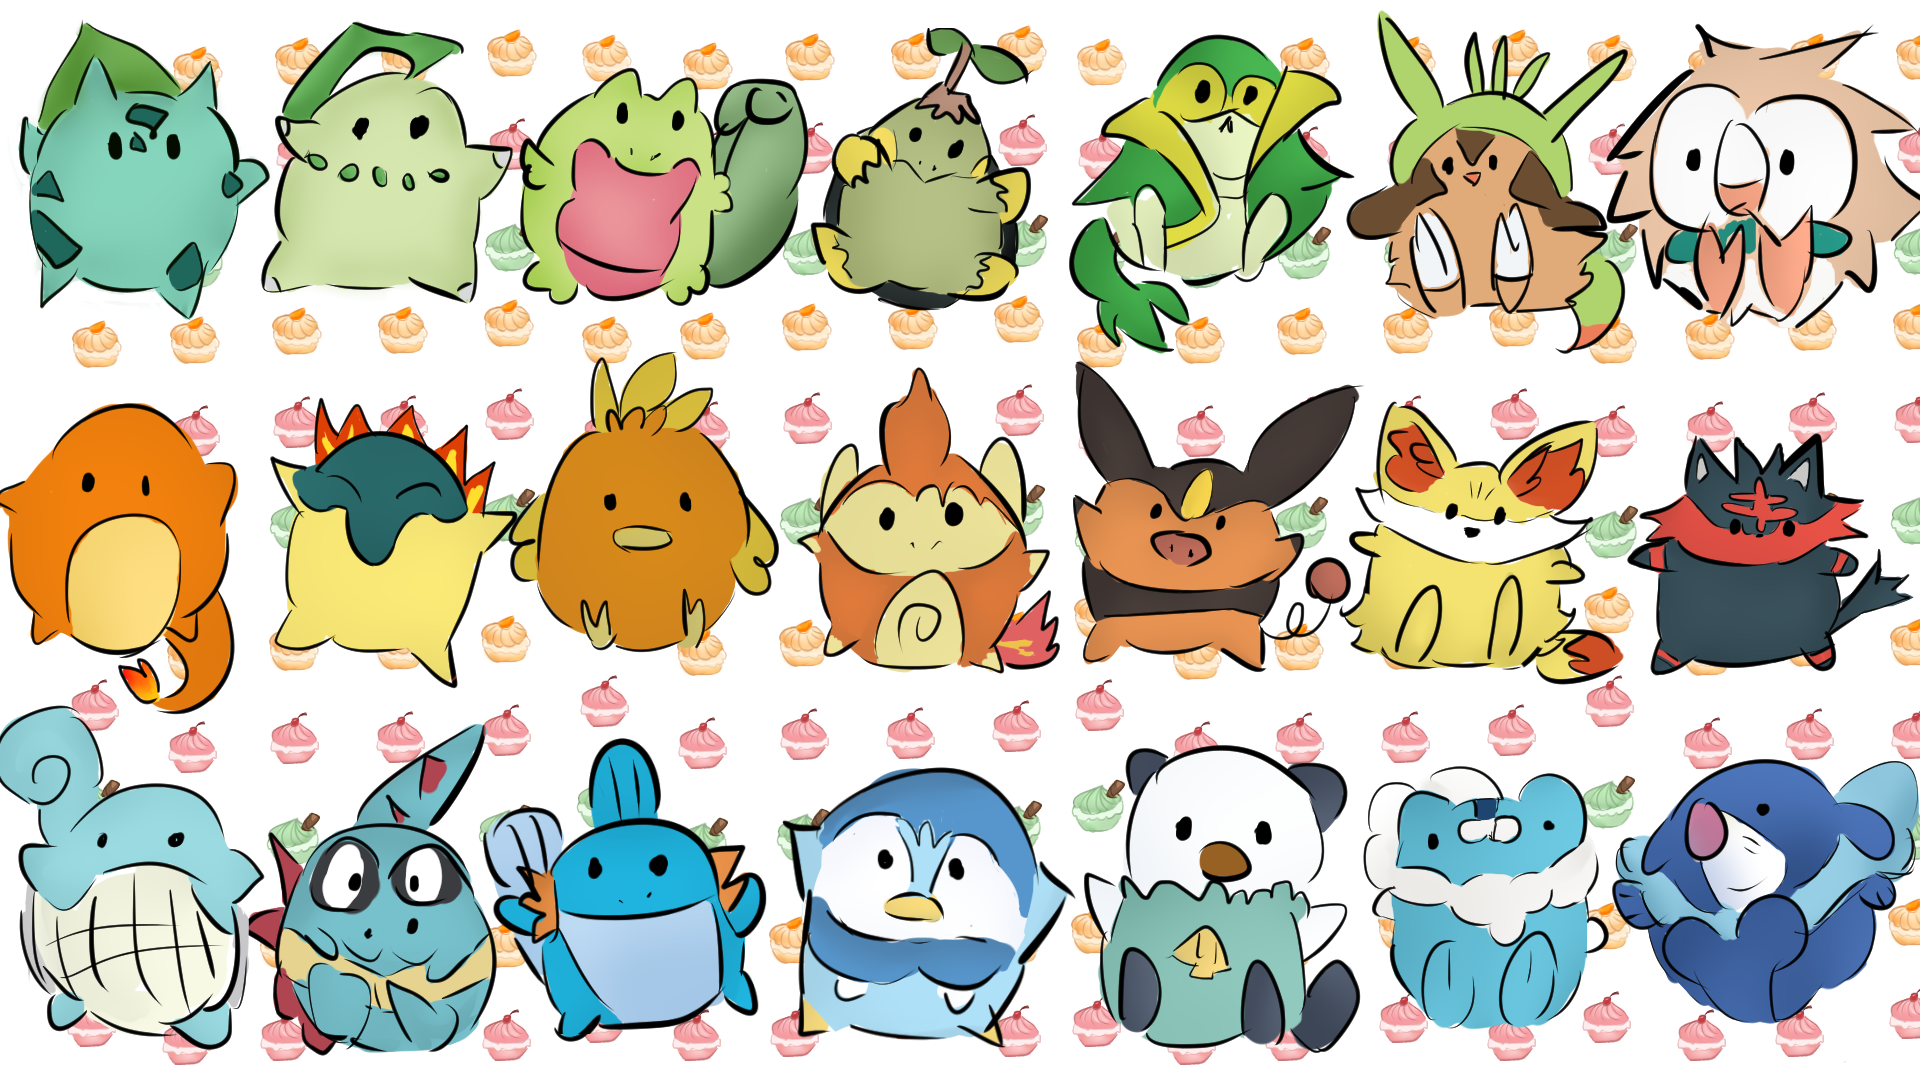 All of the starter Pokémon